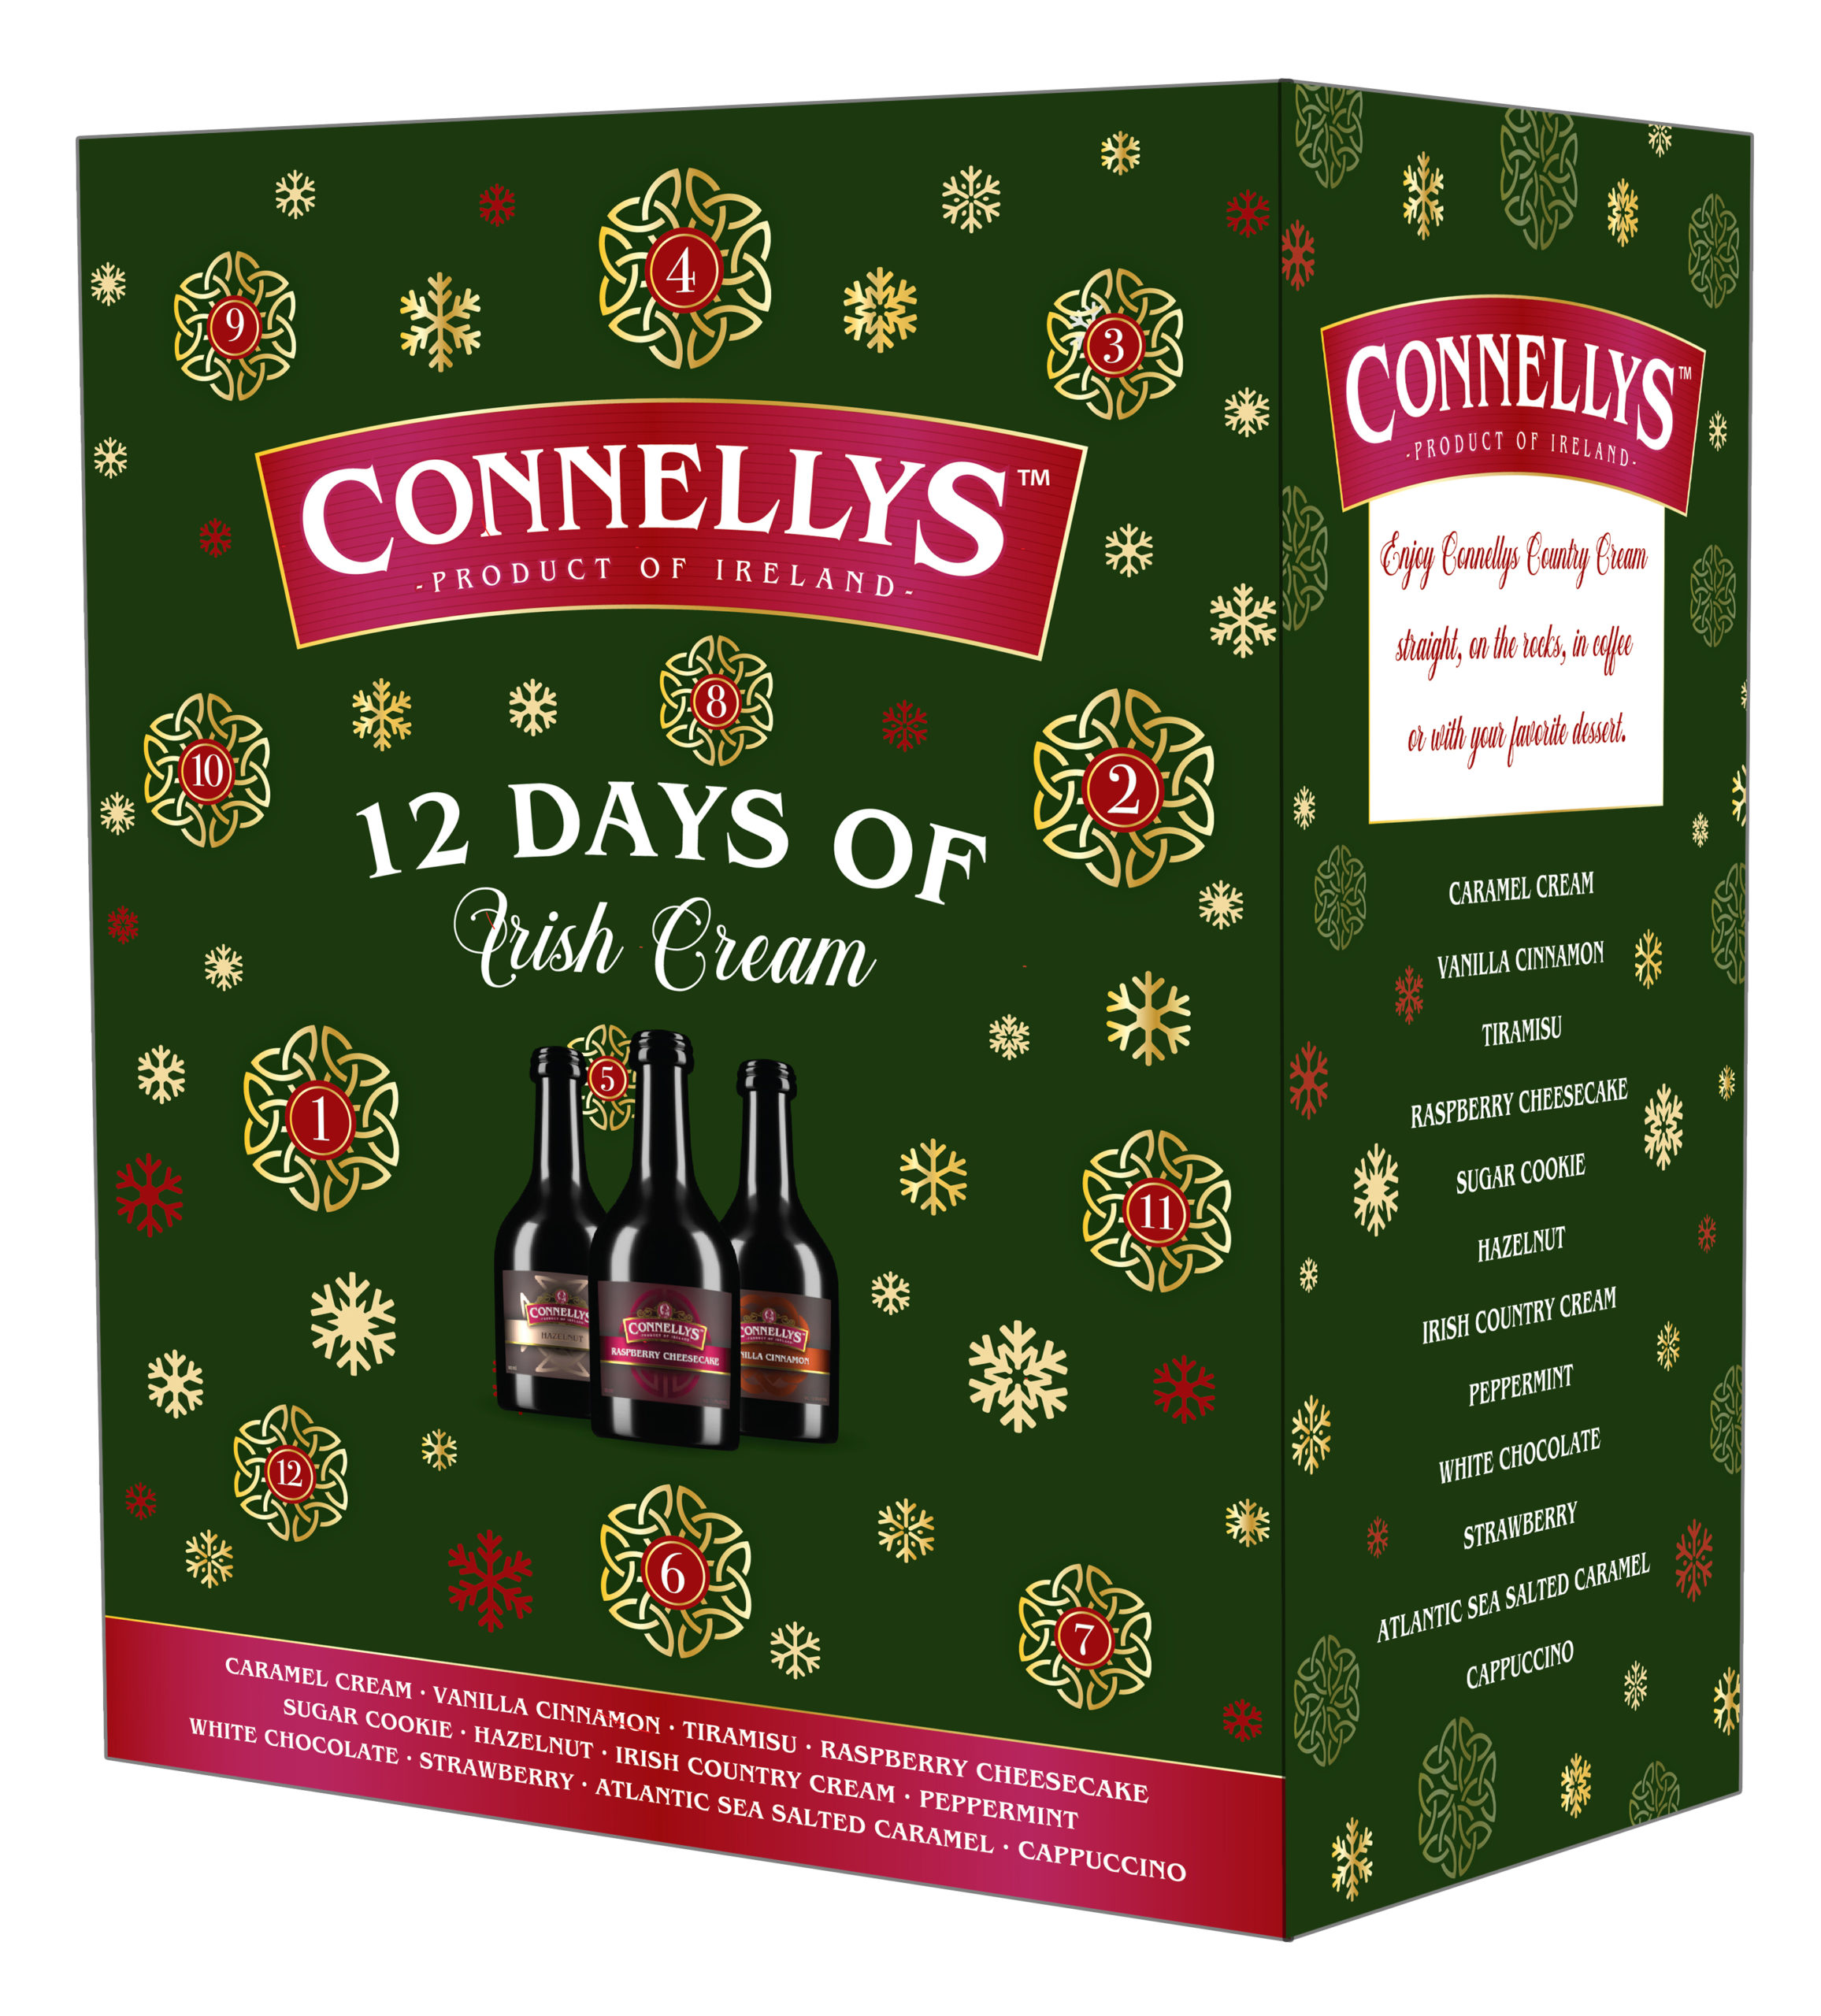 Connelly's 12 Days of Irish Cream Calendar